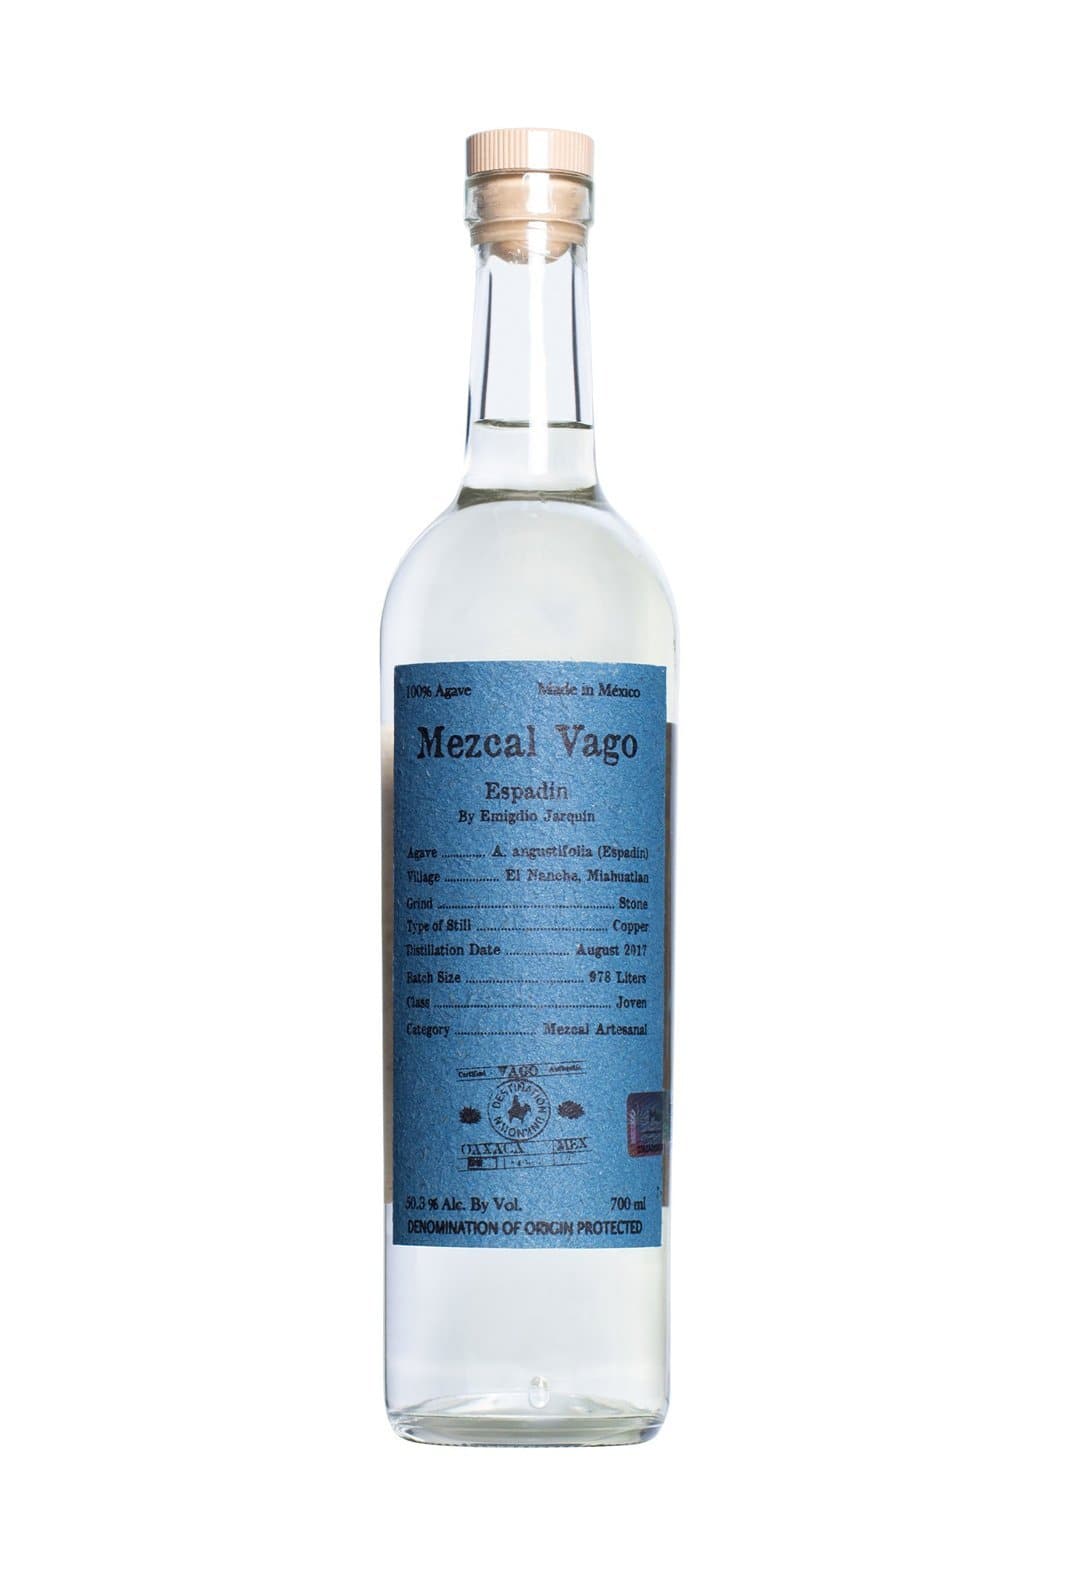 Mezcal Vago Espadin (Emigdio Jarqu’n) 50.86% 700ml | Tequila | Shop online at Spirits of France